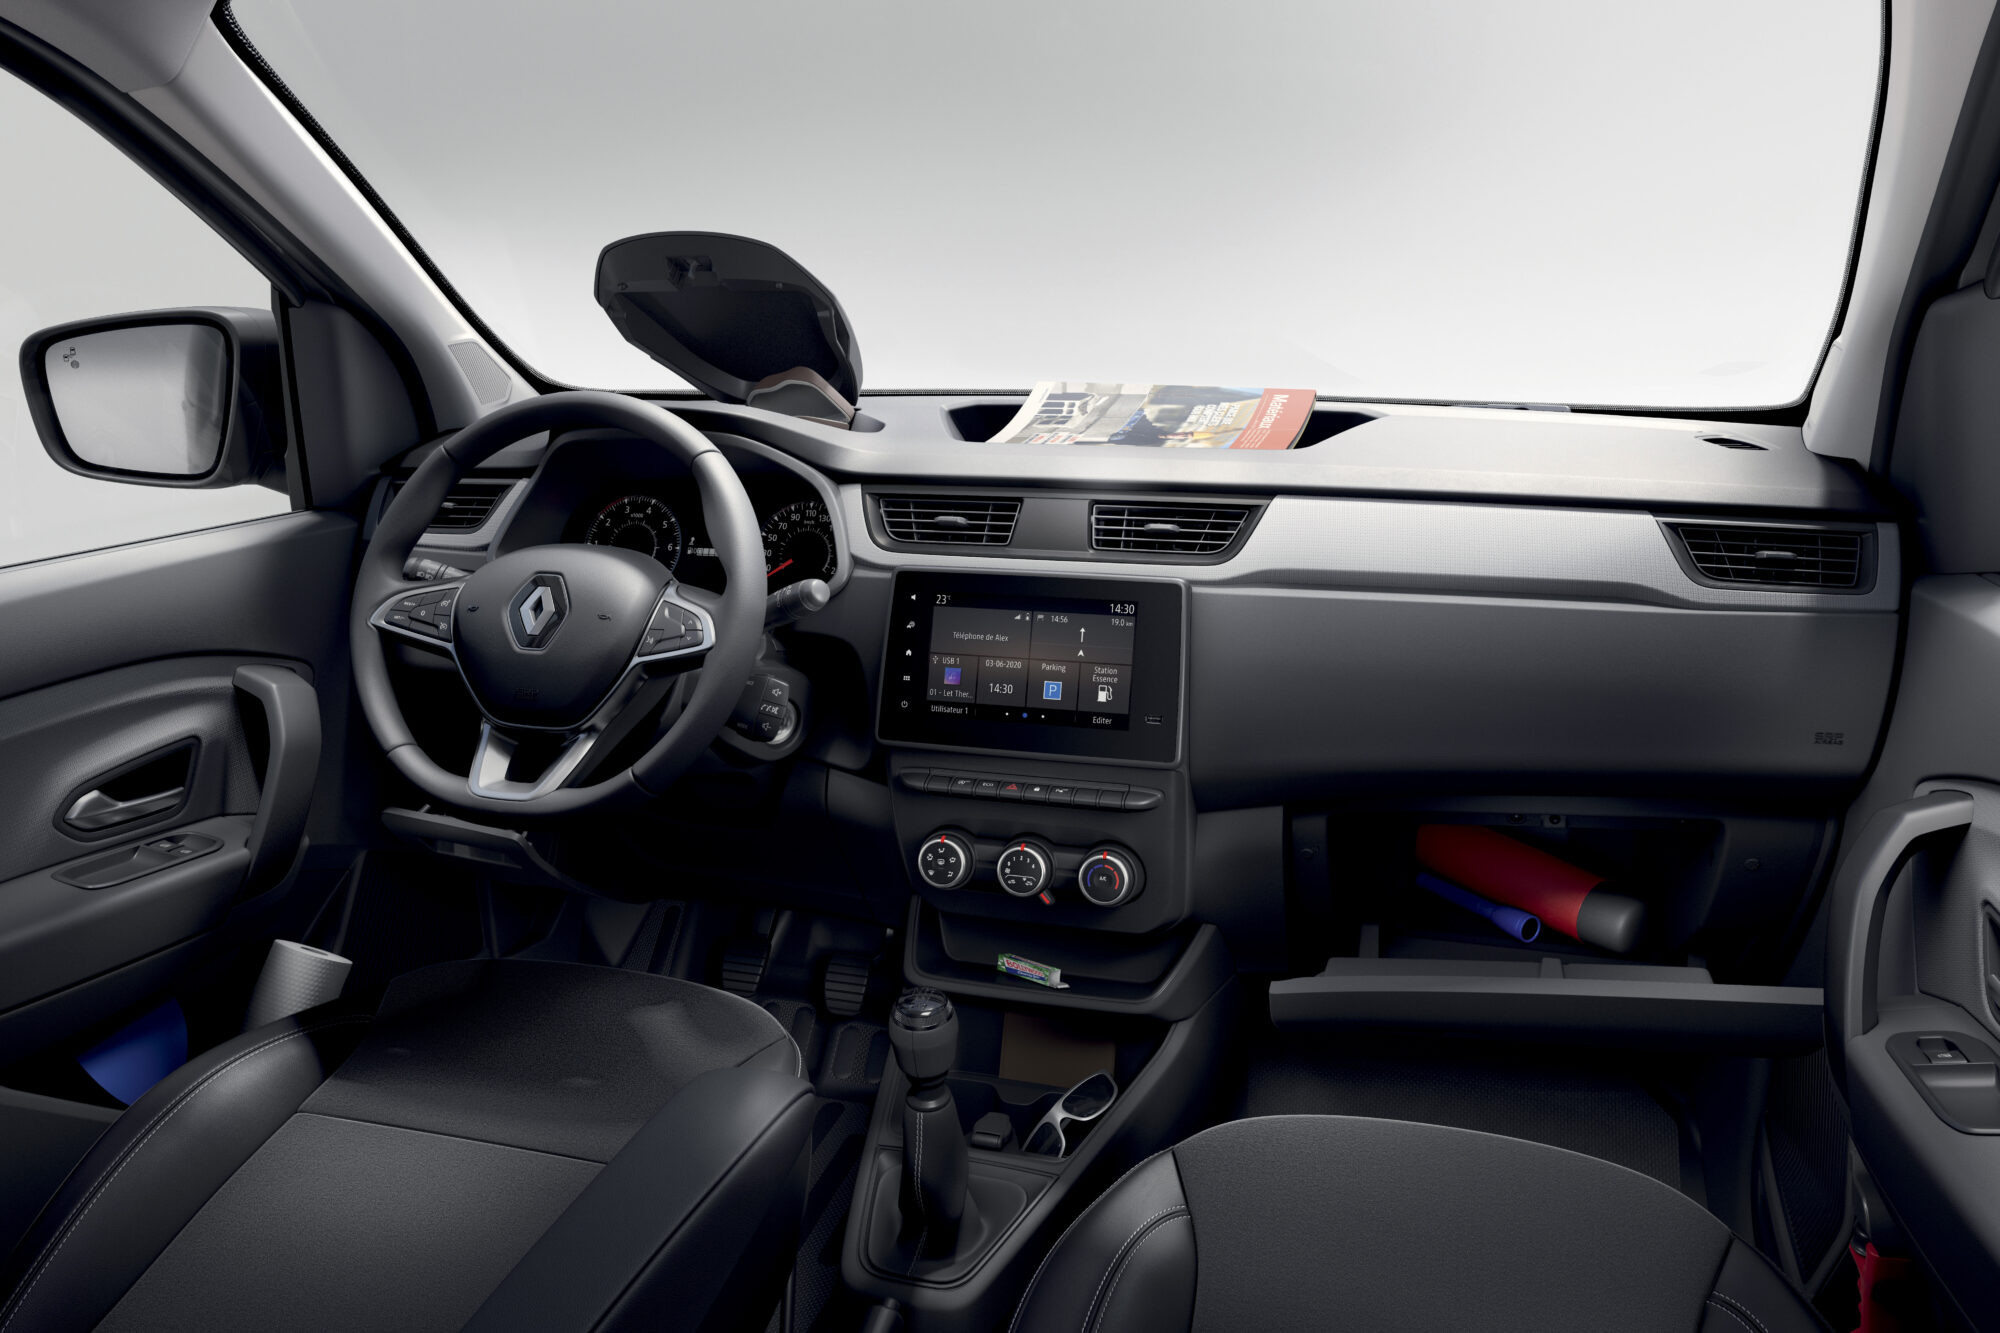 2021 - Nouveau Renault Express Van en studio